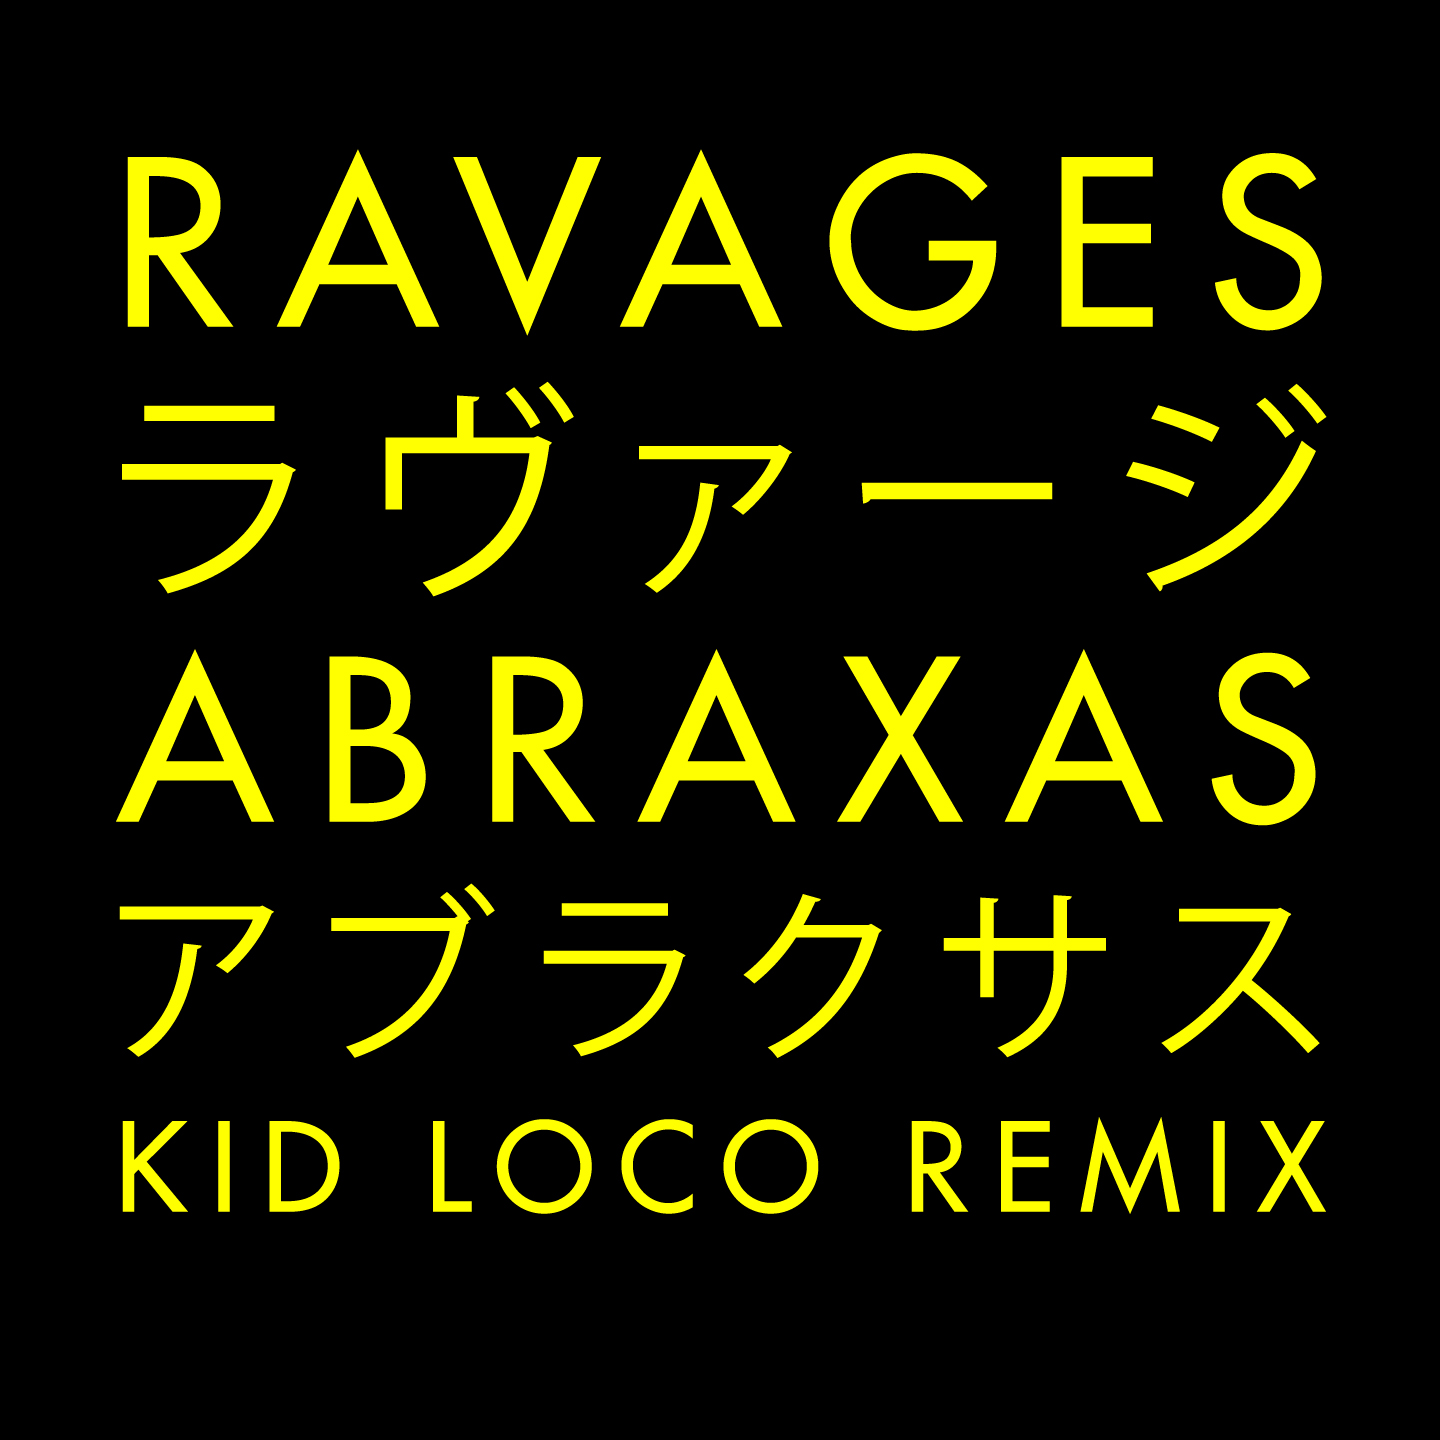 Ravages - Abraxas